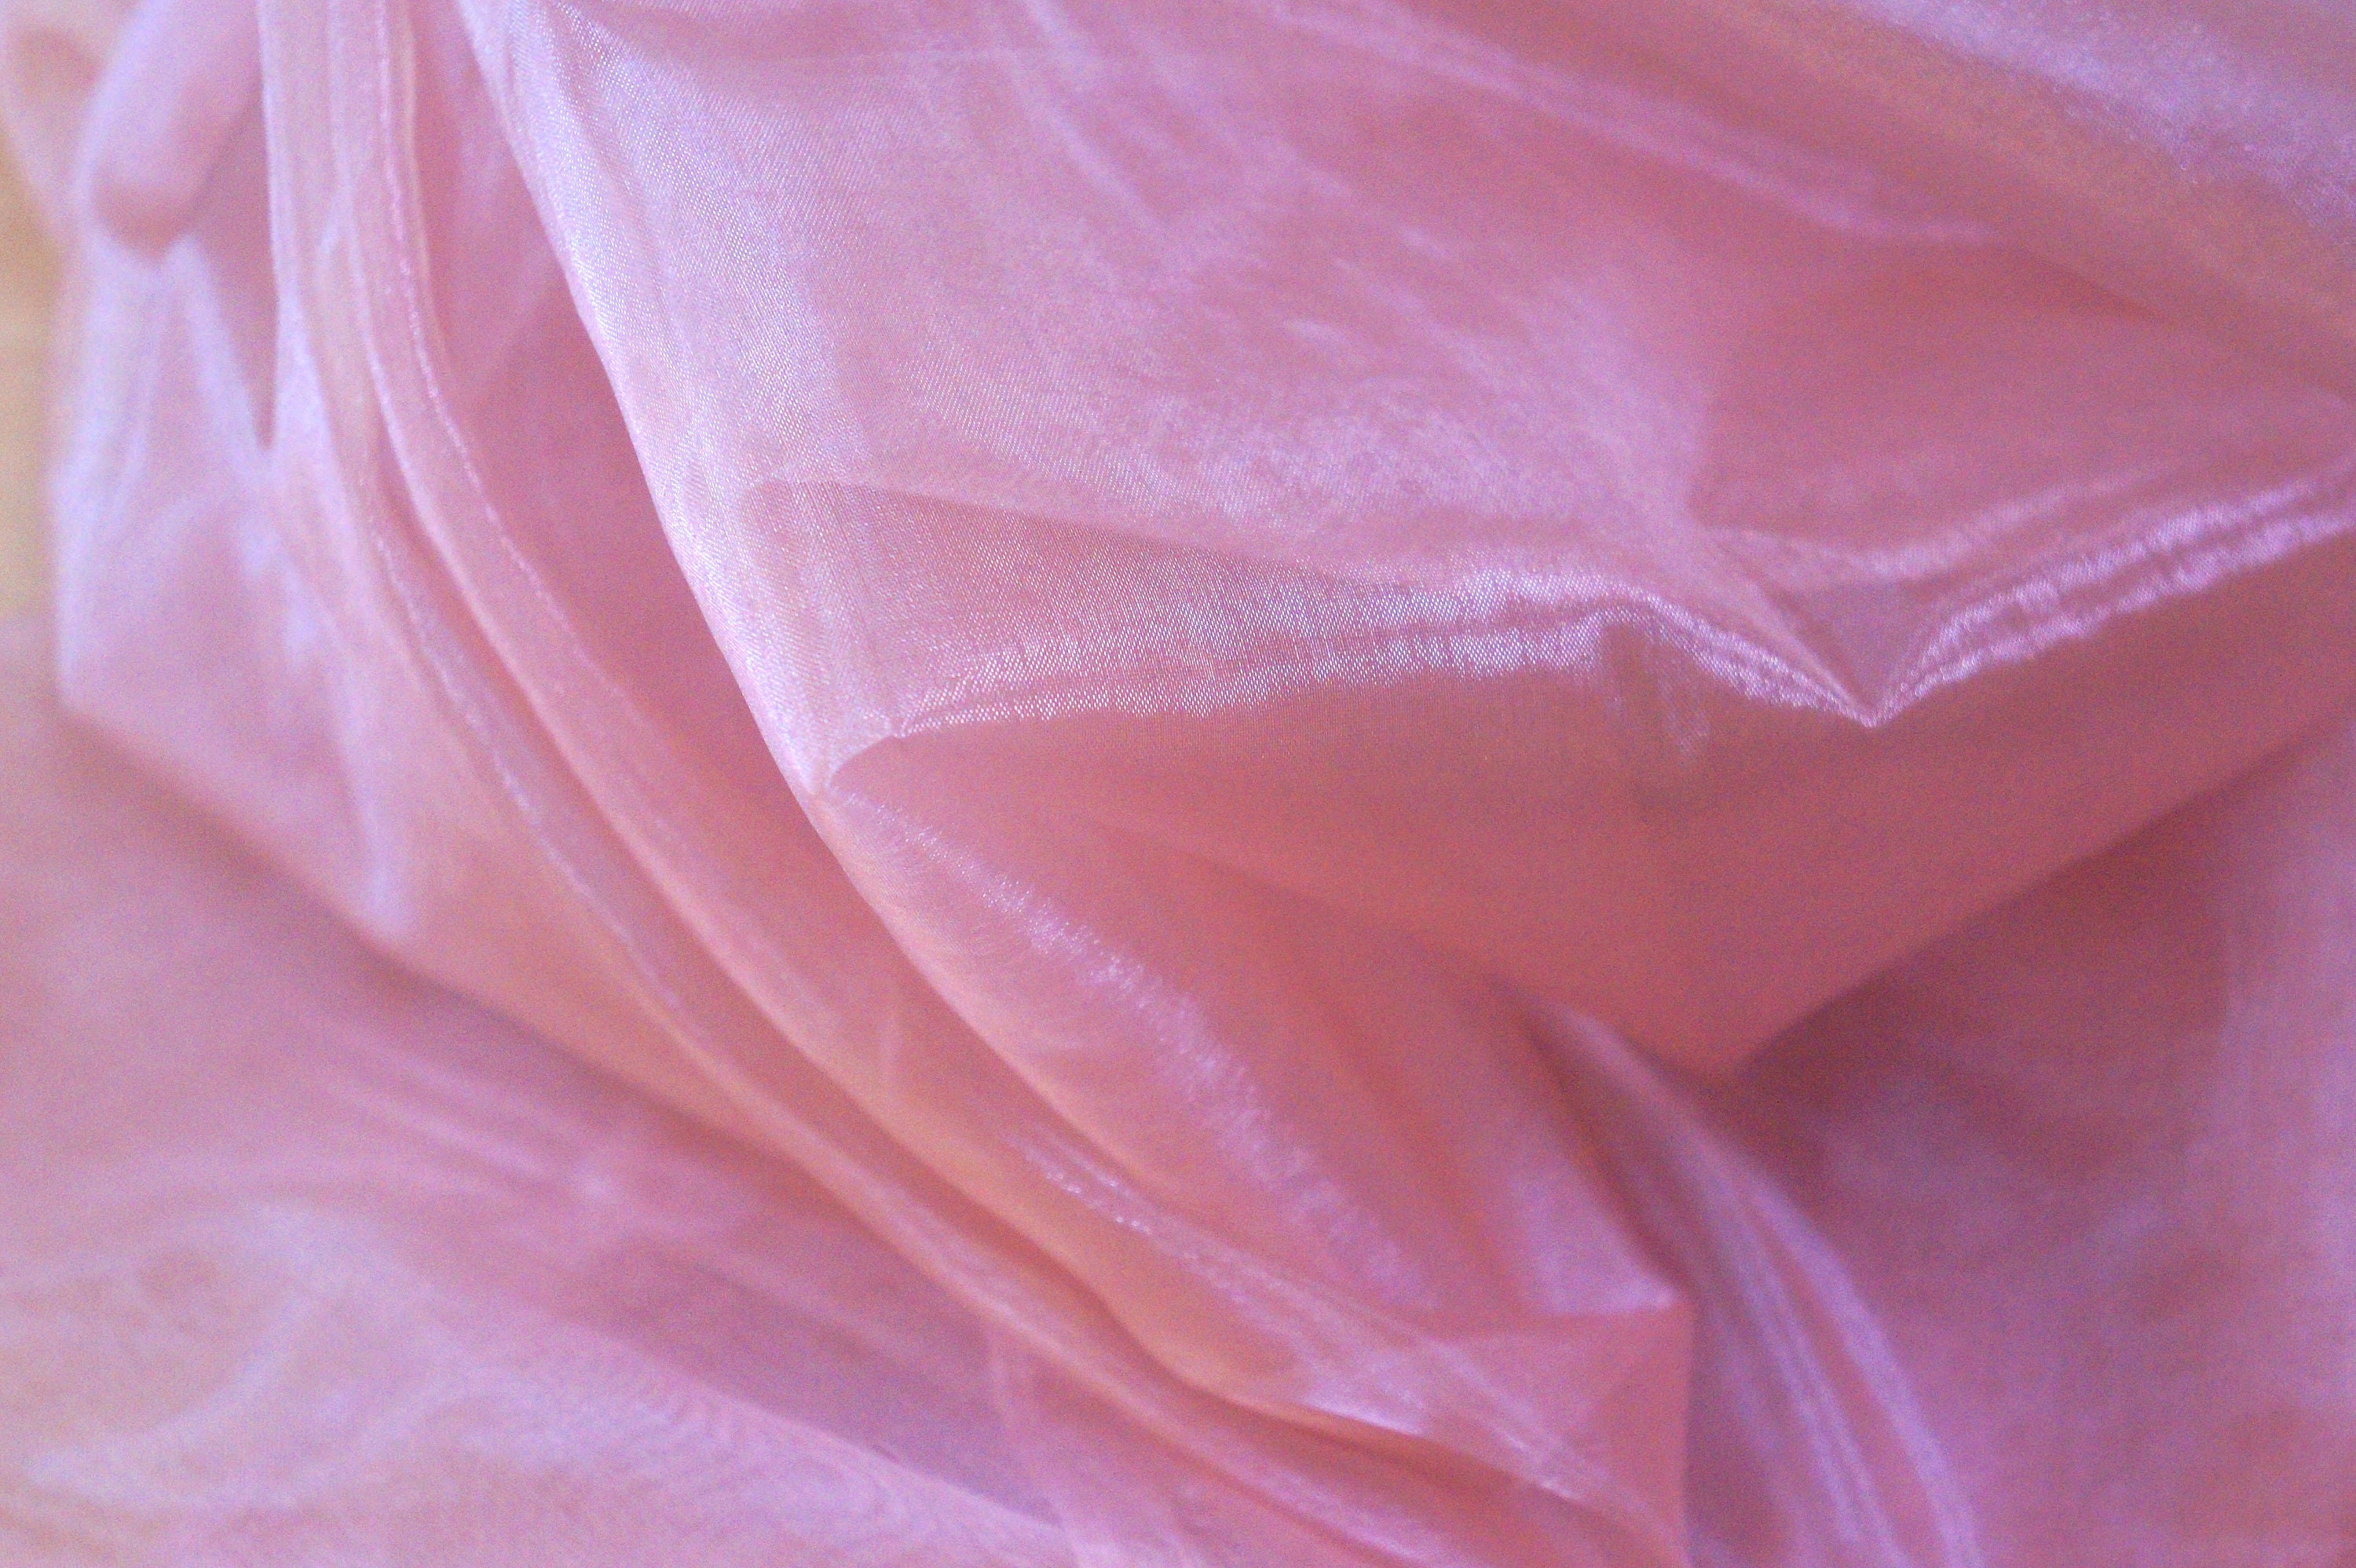 Sheer Crystal Organza Fabric for Fashion Crafts Decorations | Etsy